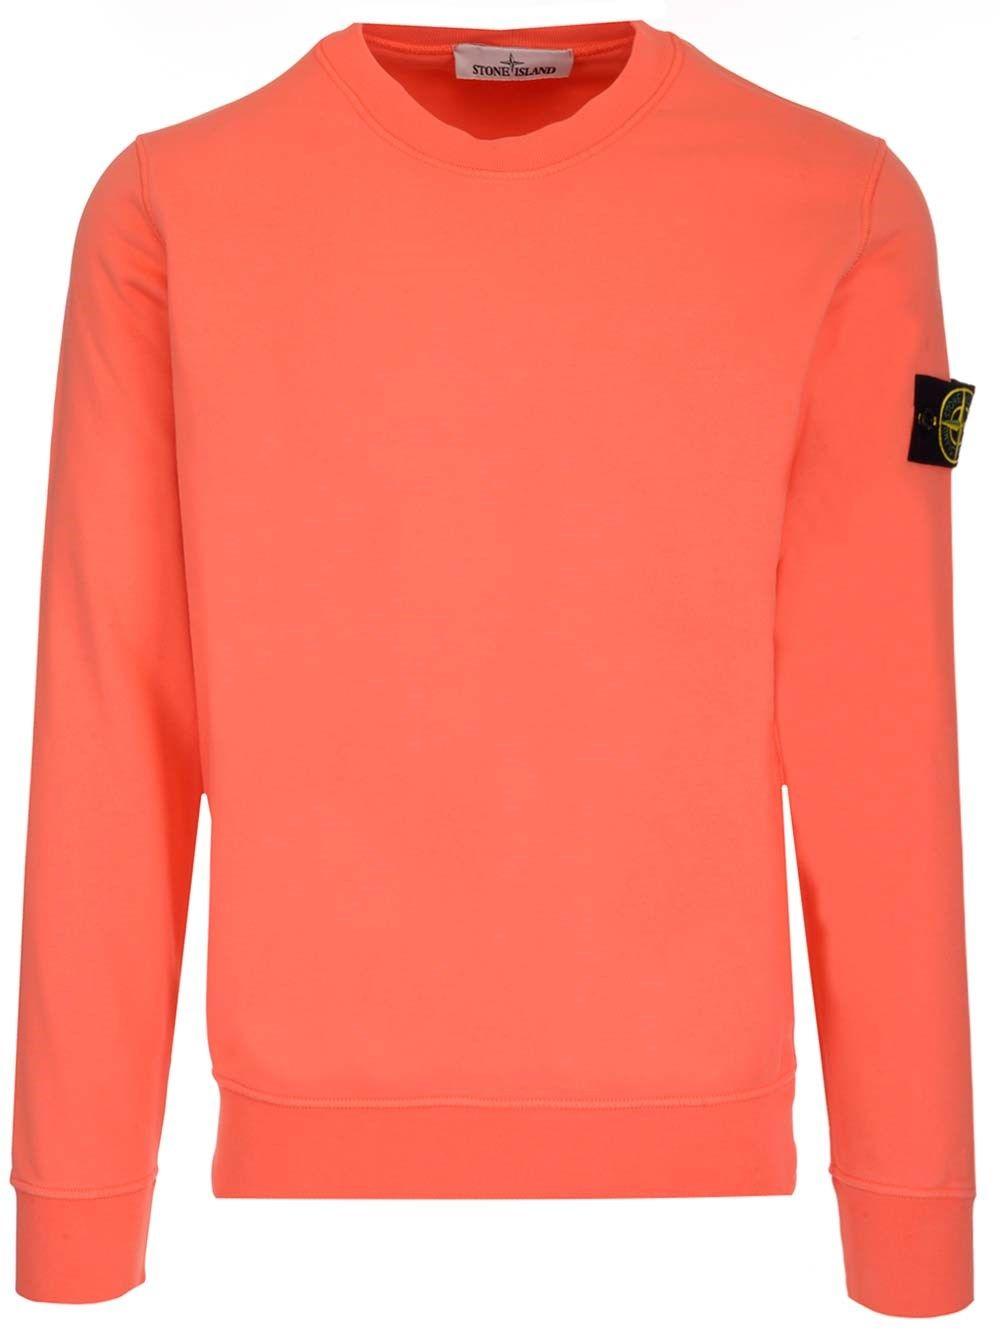 Stone Island Sweatshirt in Arancio (Orange) for Men - Save 38% | Lyst